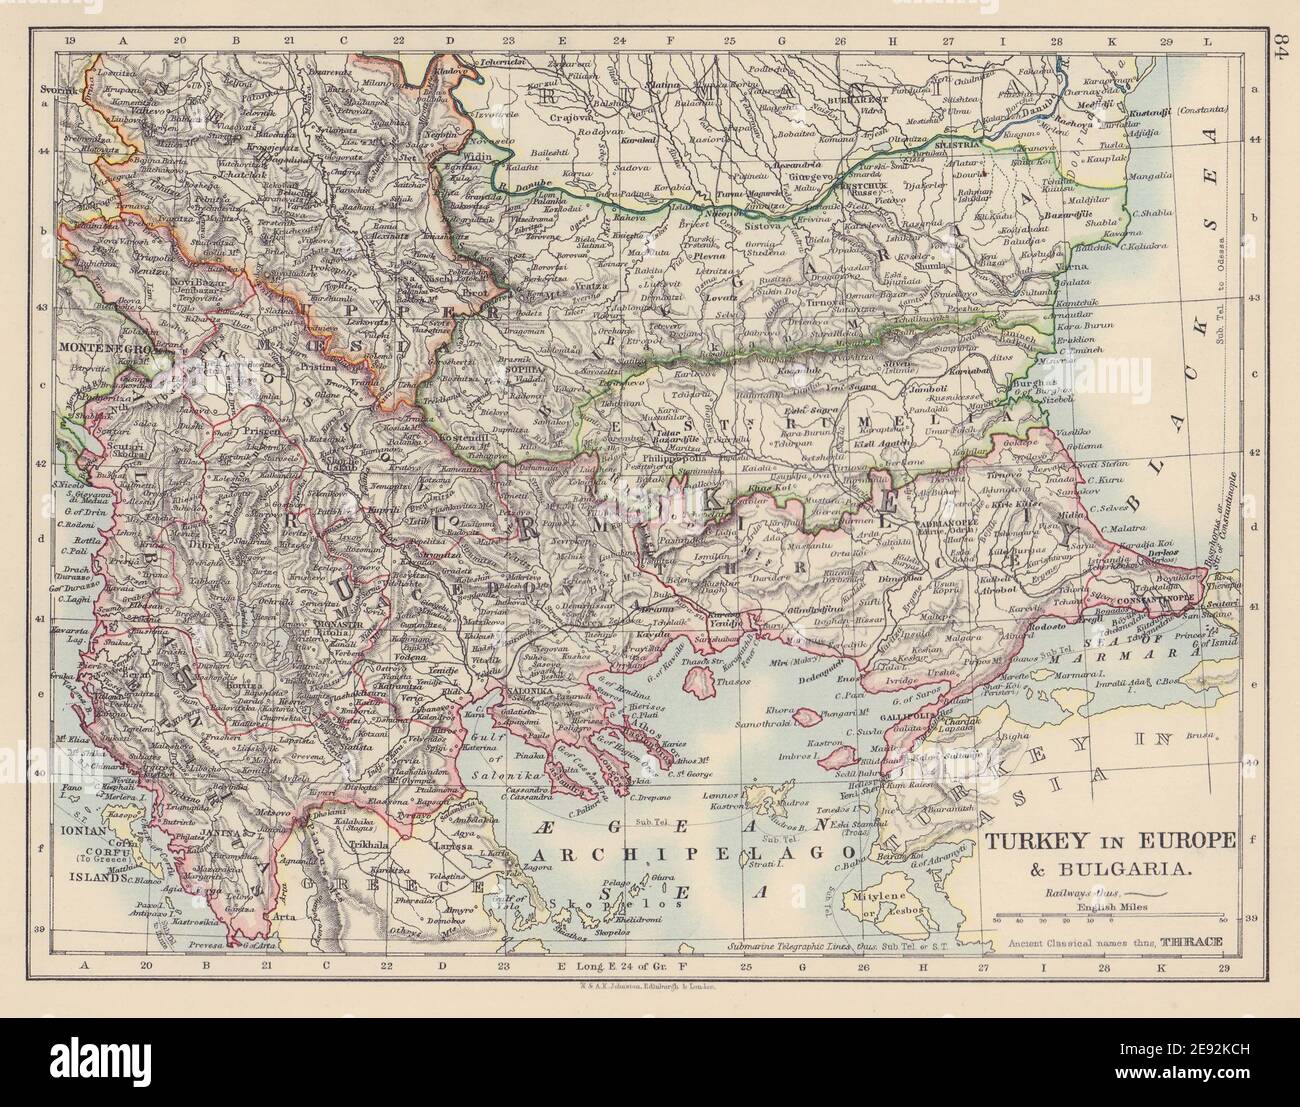 TURKEY IN EUROPE & BULGARIA. Rumili East Rumelia Balkans. JOHNSTON 1901 map Stock Photo